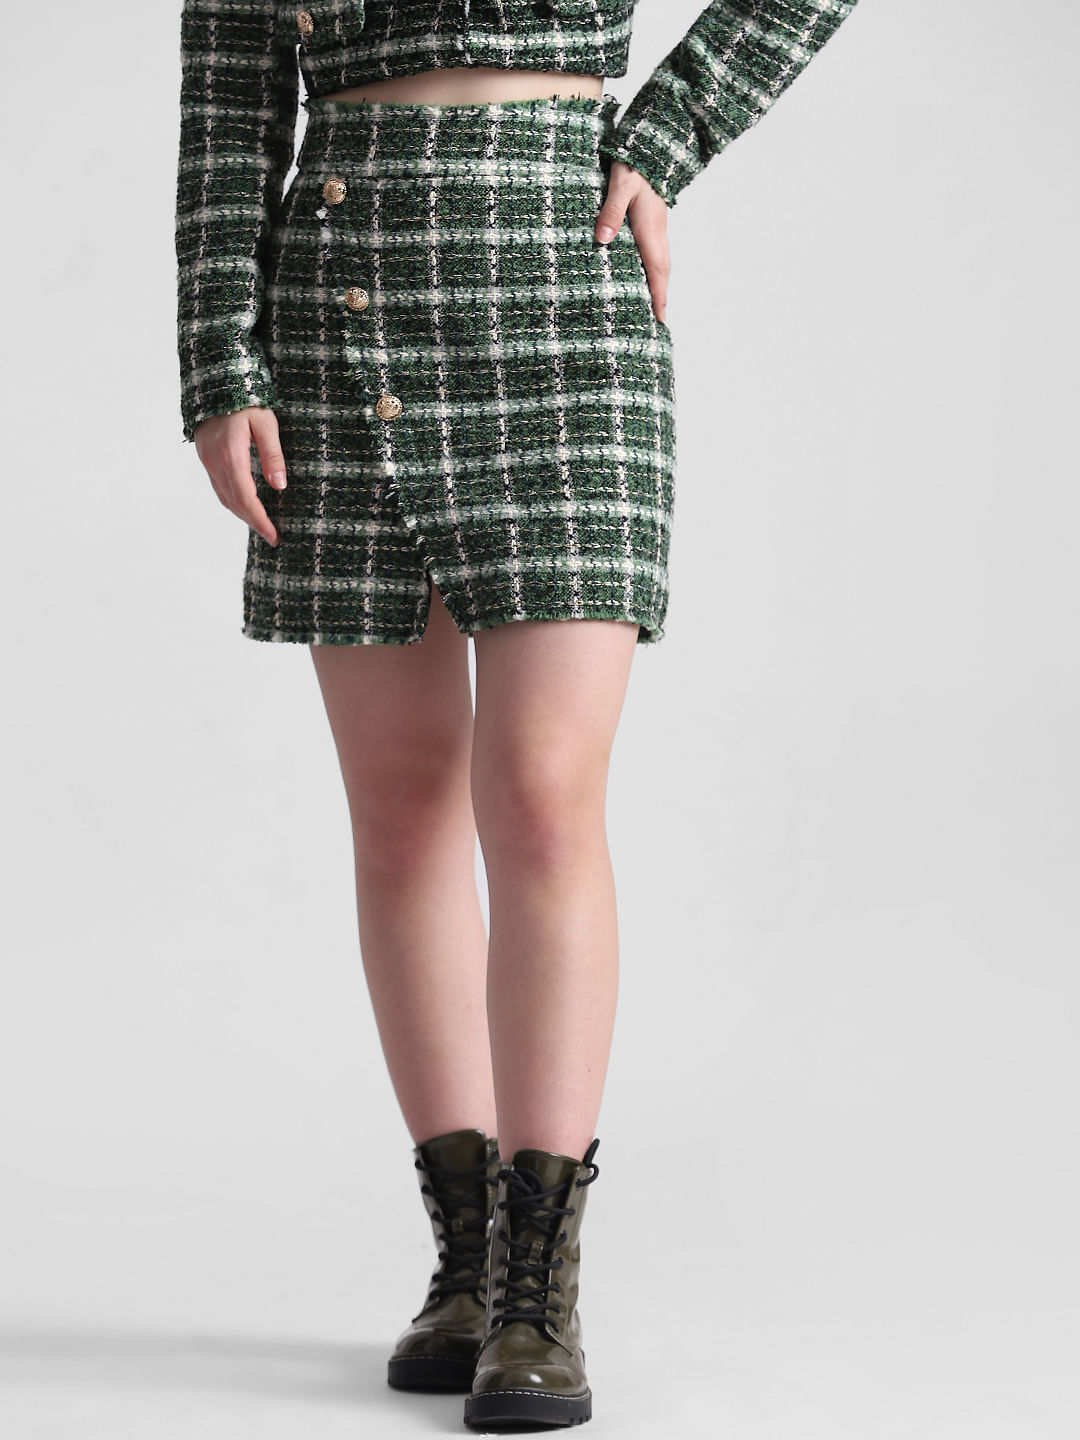 Women's Topshop Plaid Skirt, Size 4 US (fits like 0-2) - Green | eBay